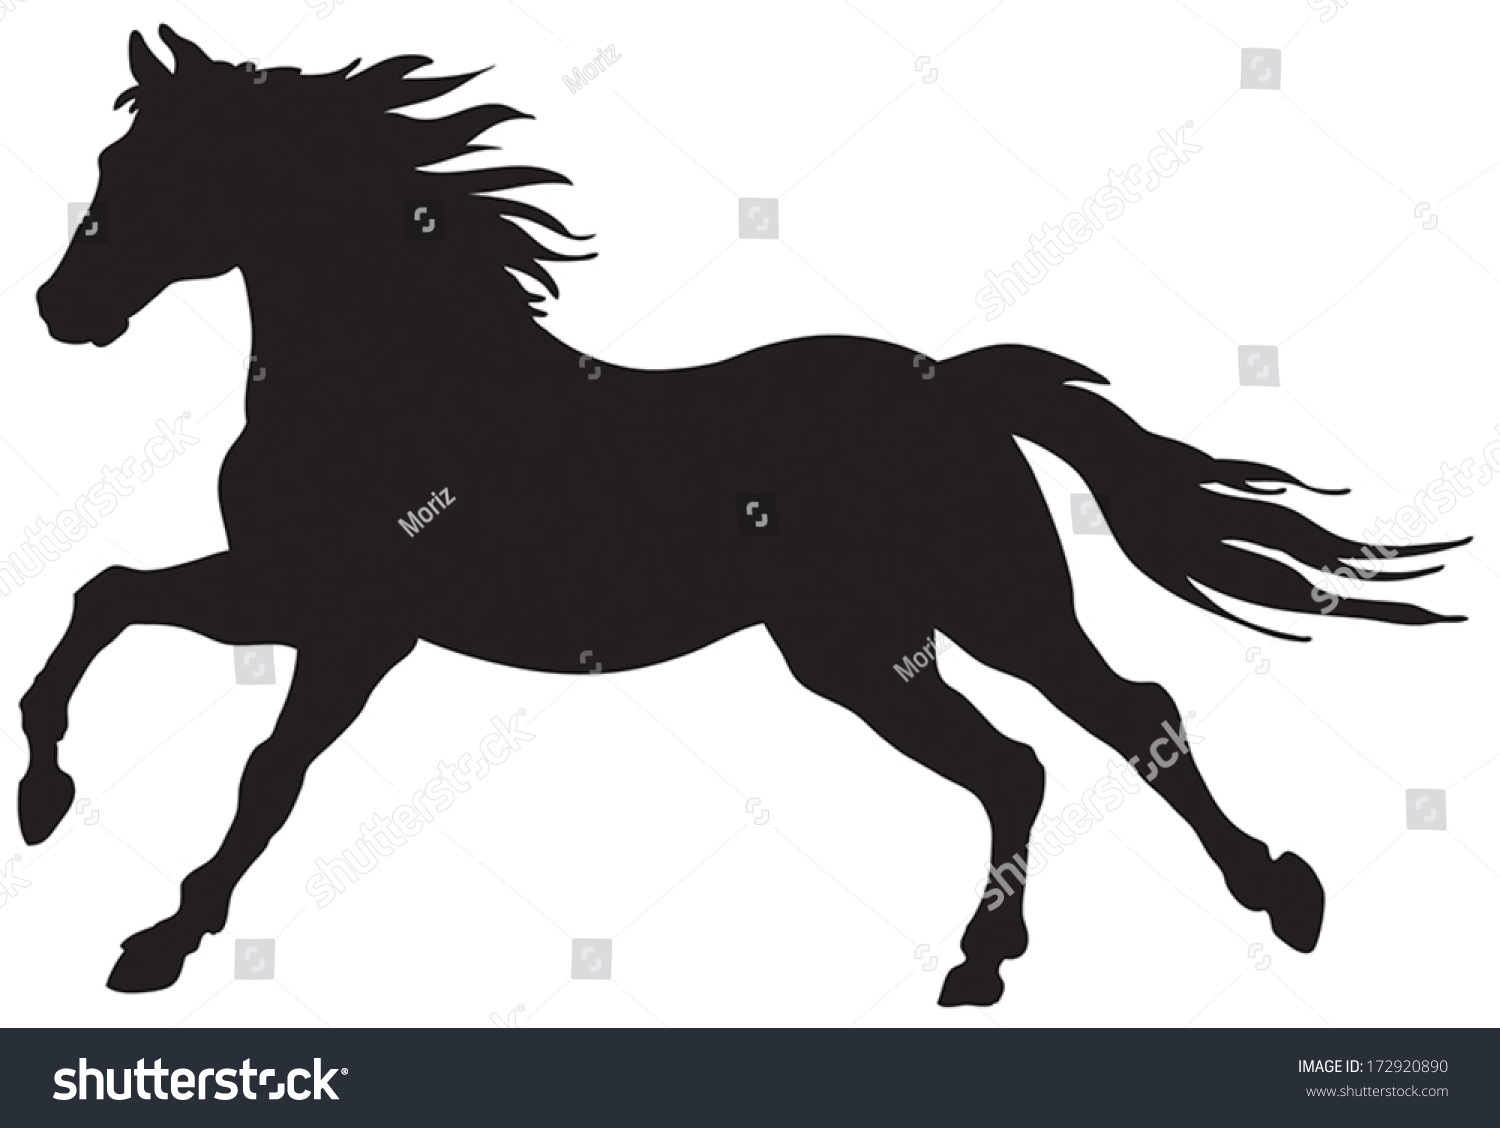 Трафарет лошади на окно